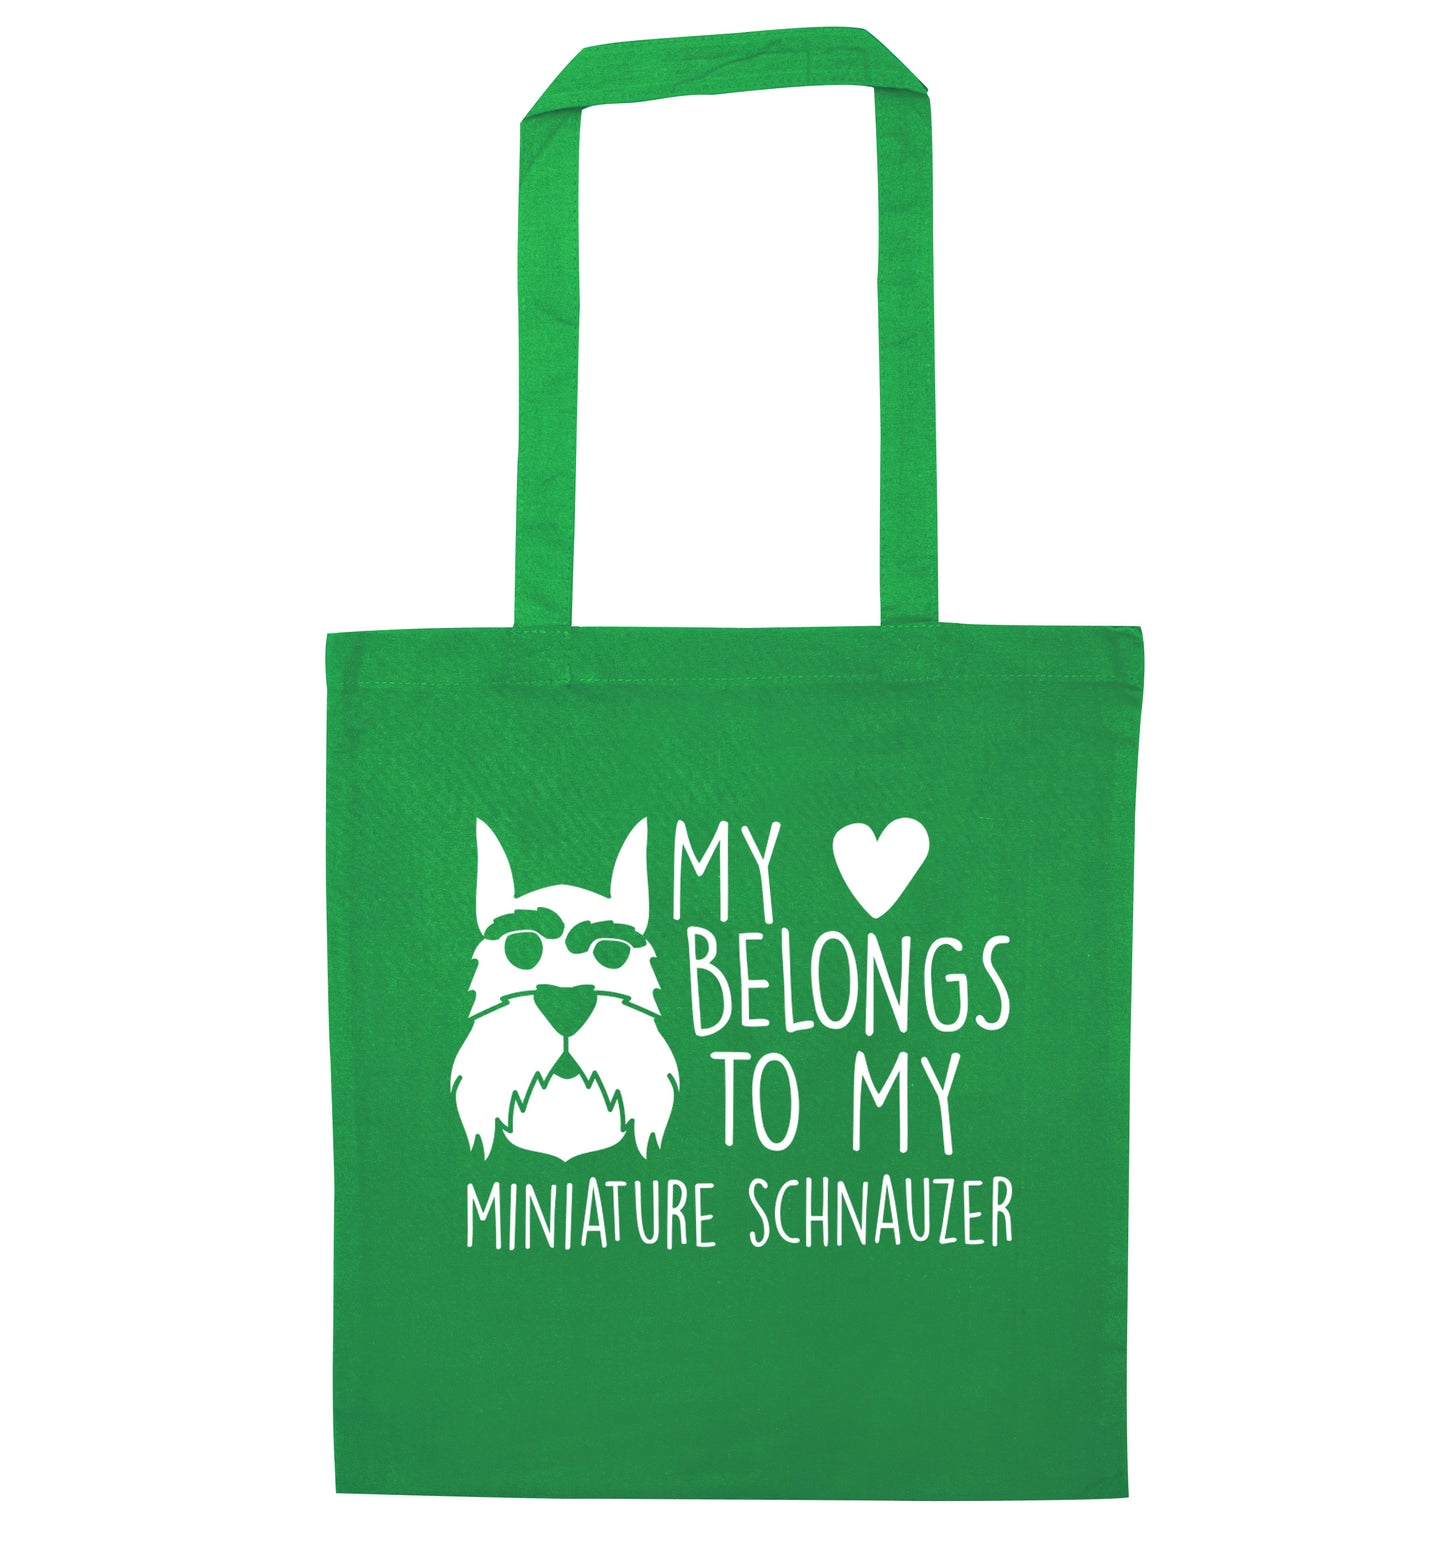 My heart belongs to my miniature schnauzer green tote bag